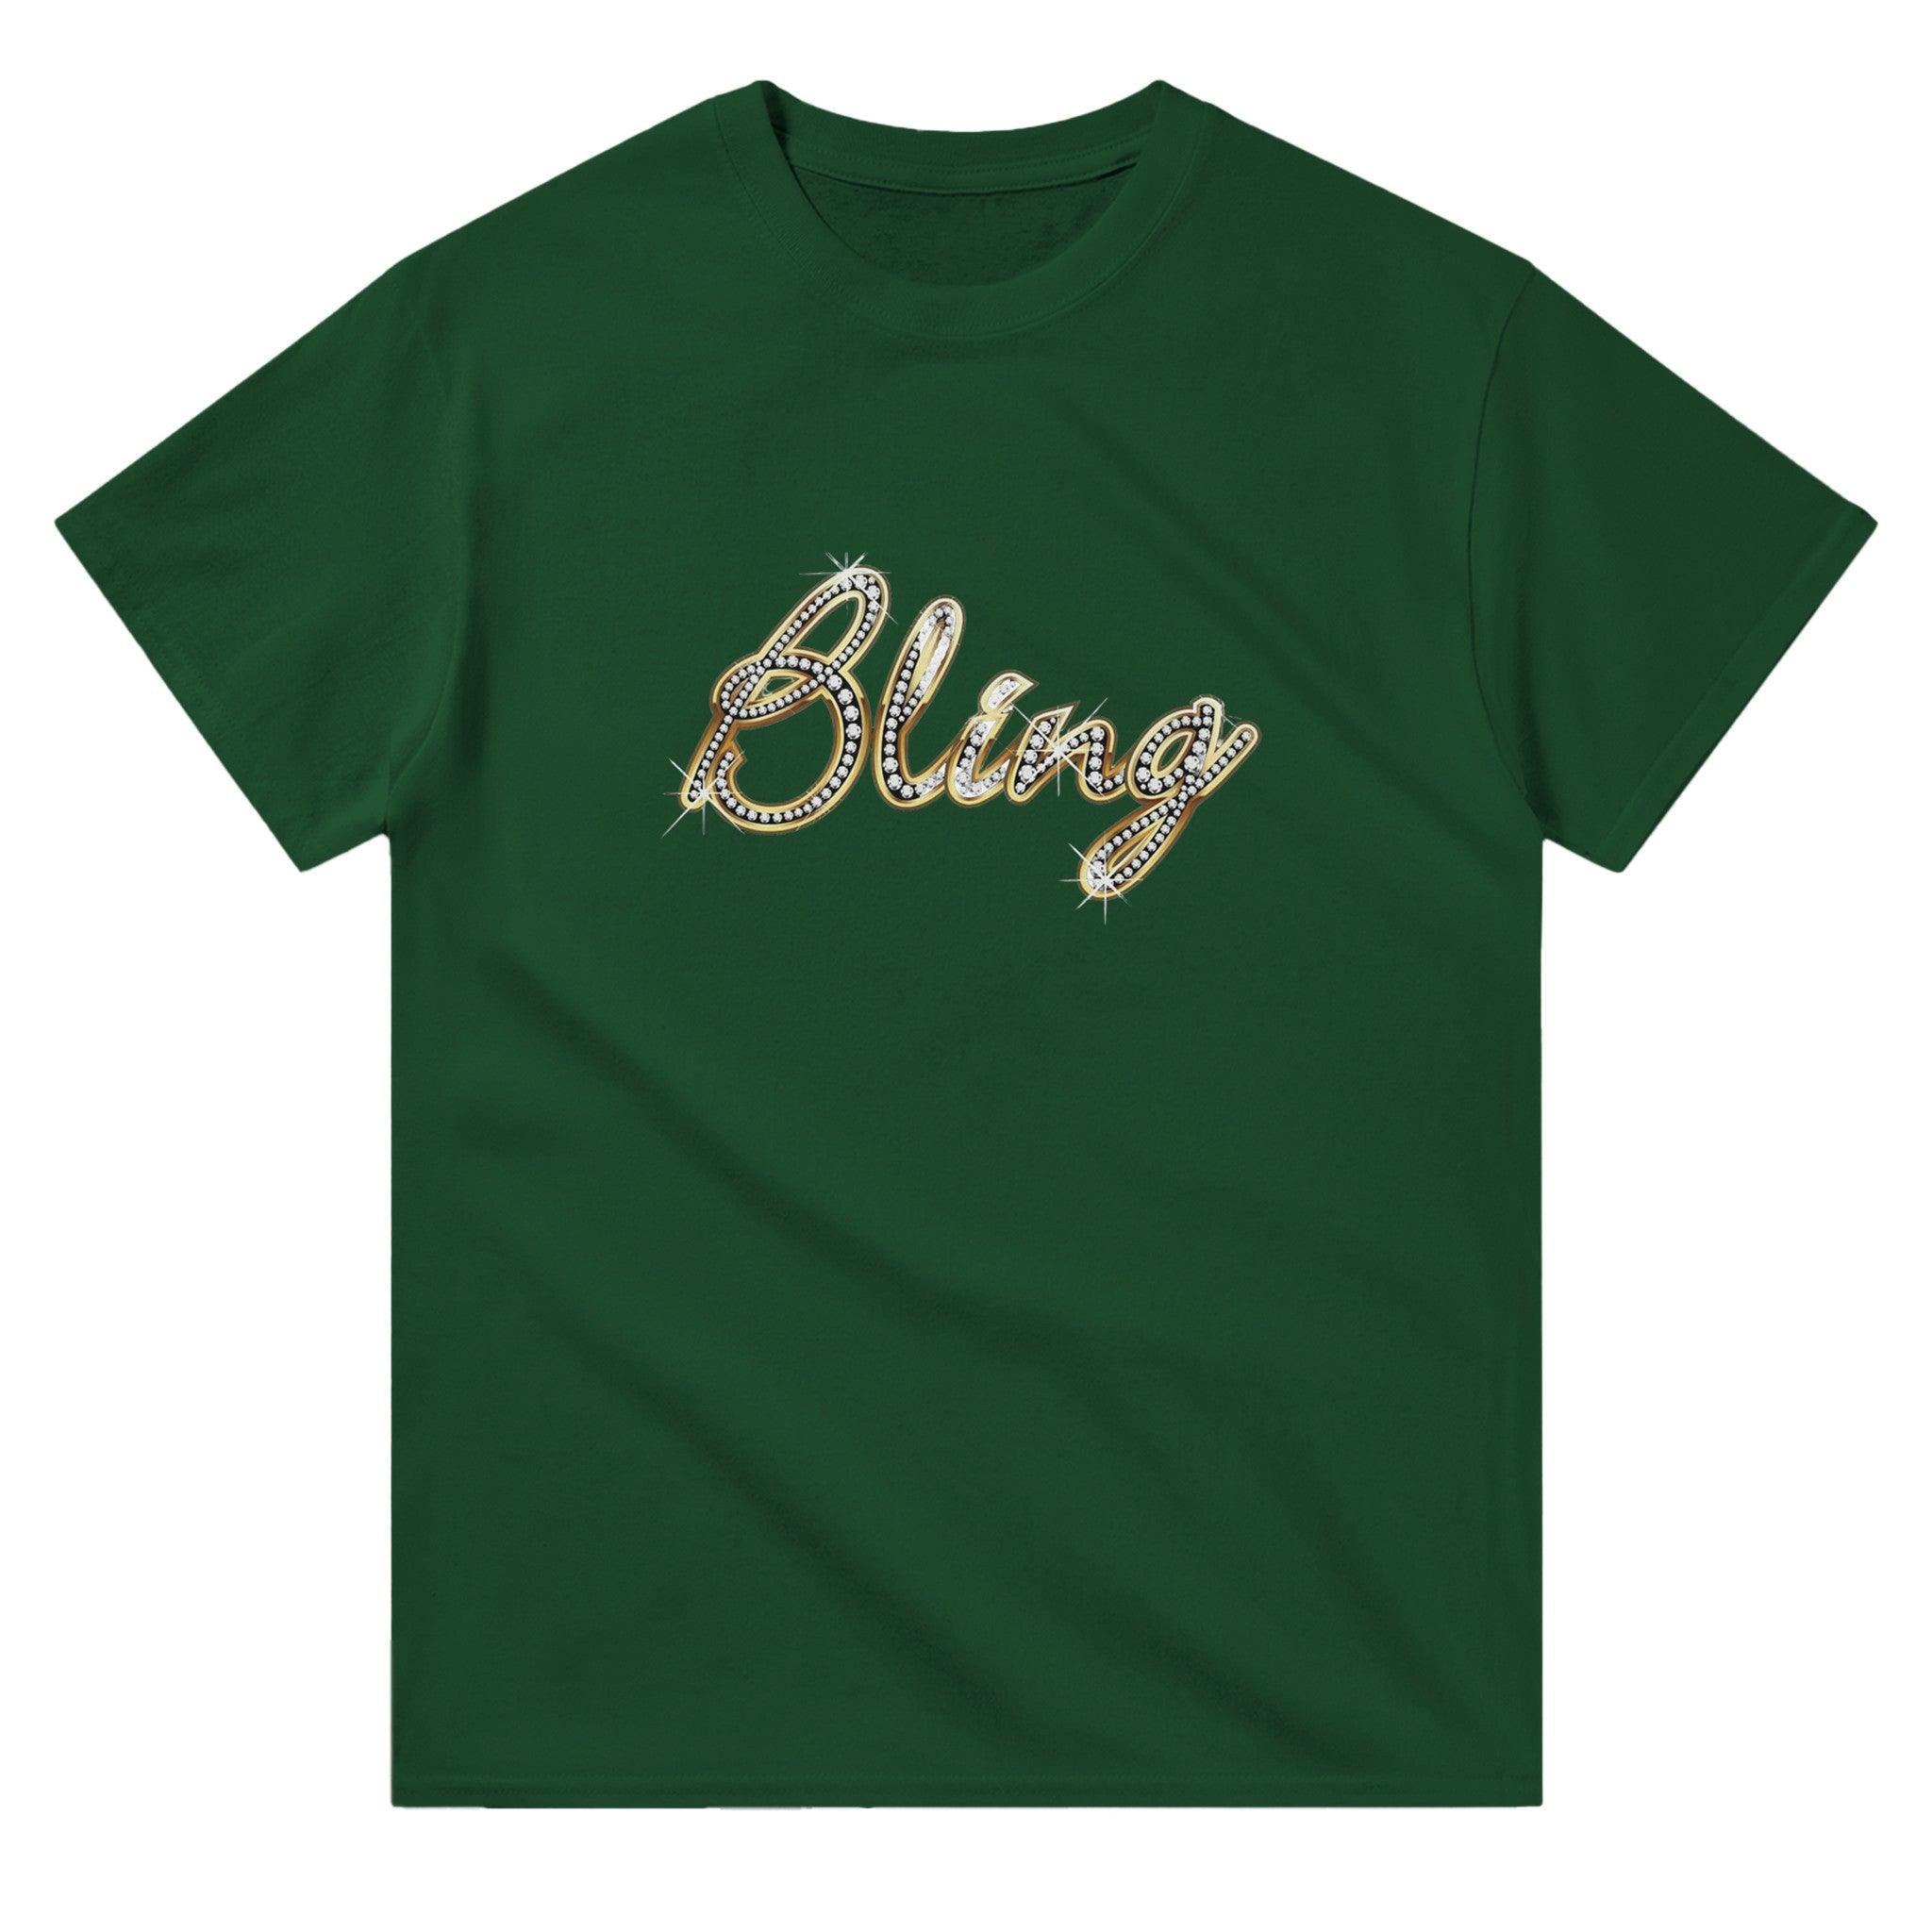 'Bling' Boyfriend T-shirt - POMA